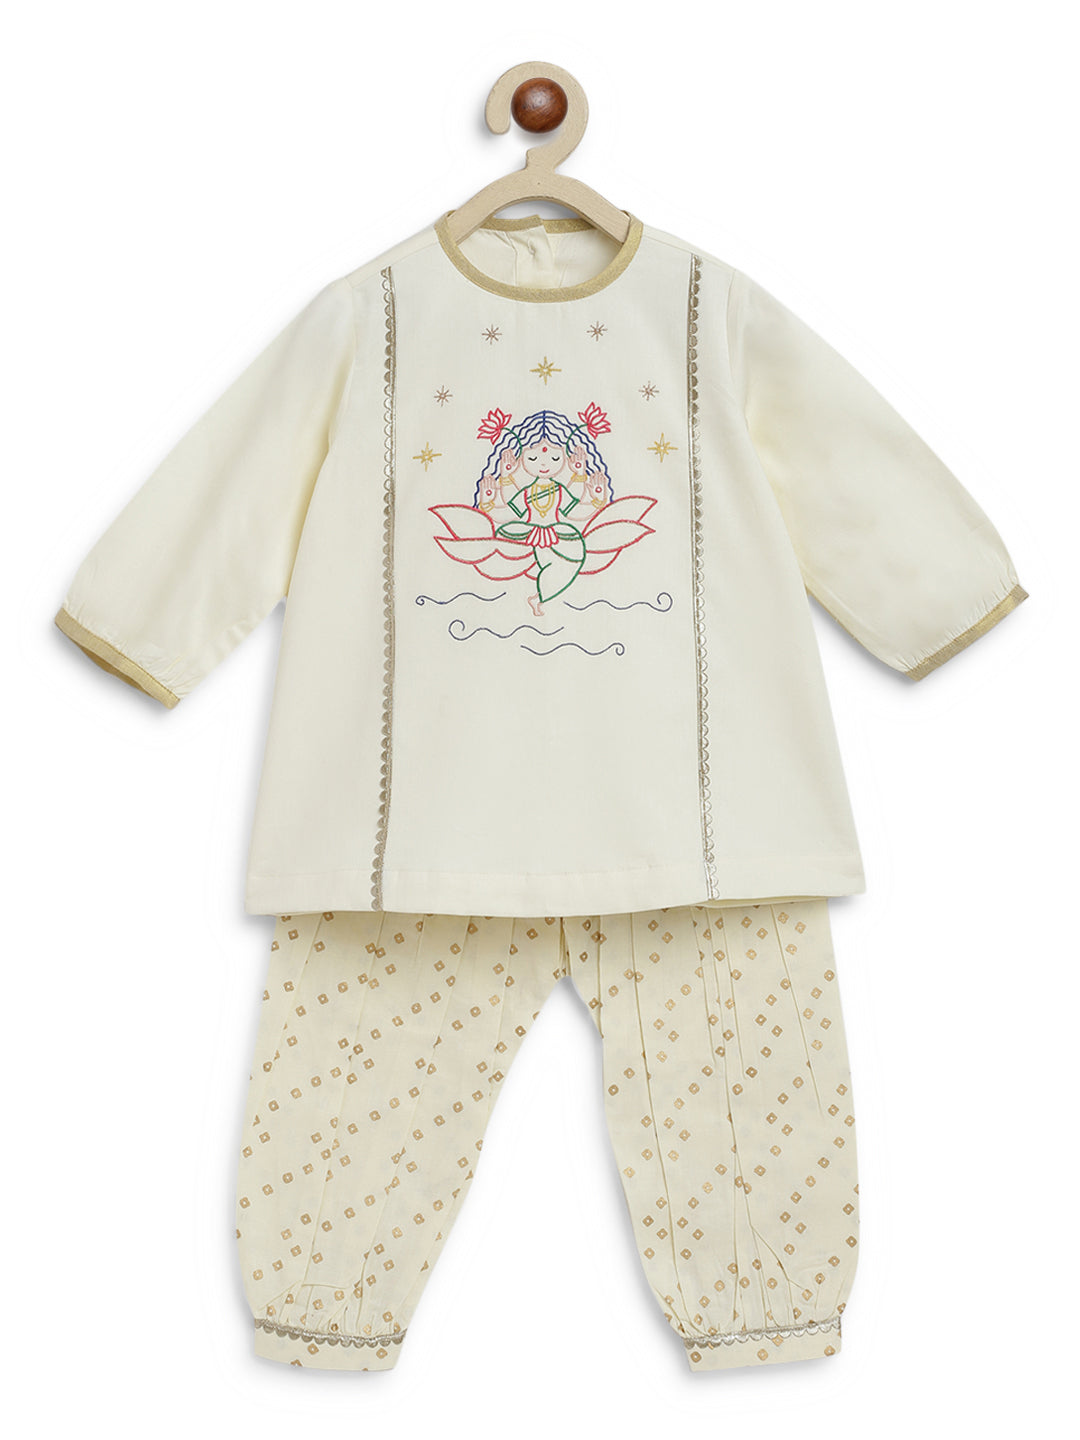 Unisex Baby Full Sleeve Woolen Suit Set 4pcs, Cardigan at Rs 260/set in  Ludhiana